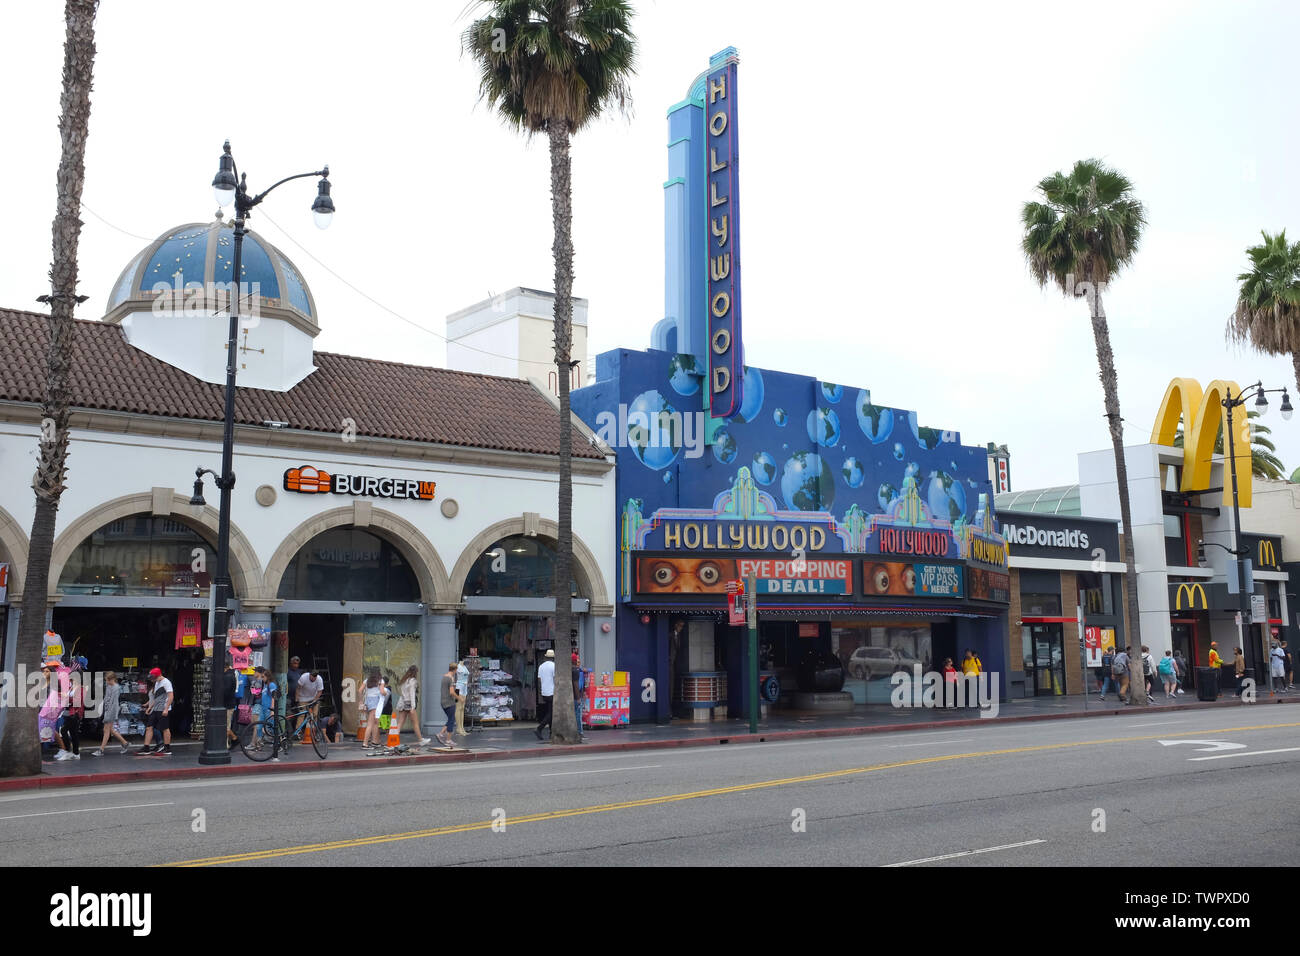 HOLLYWOOD - CALIFORNIA: Giugno 18, 2019: Hollywood Boulevard scena di strada con i negozi, i teatri e i turisti nel Walk of Fame distretto. Foto Stock